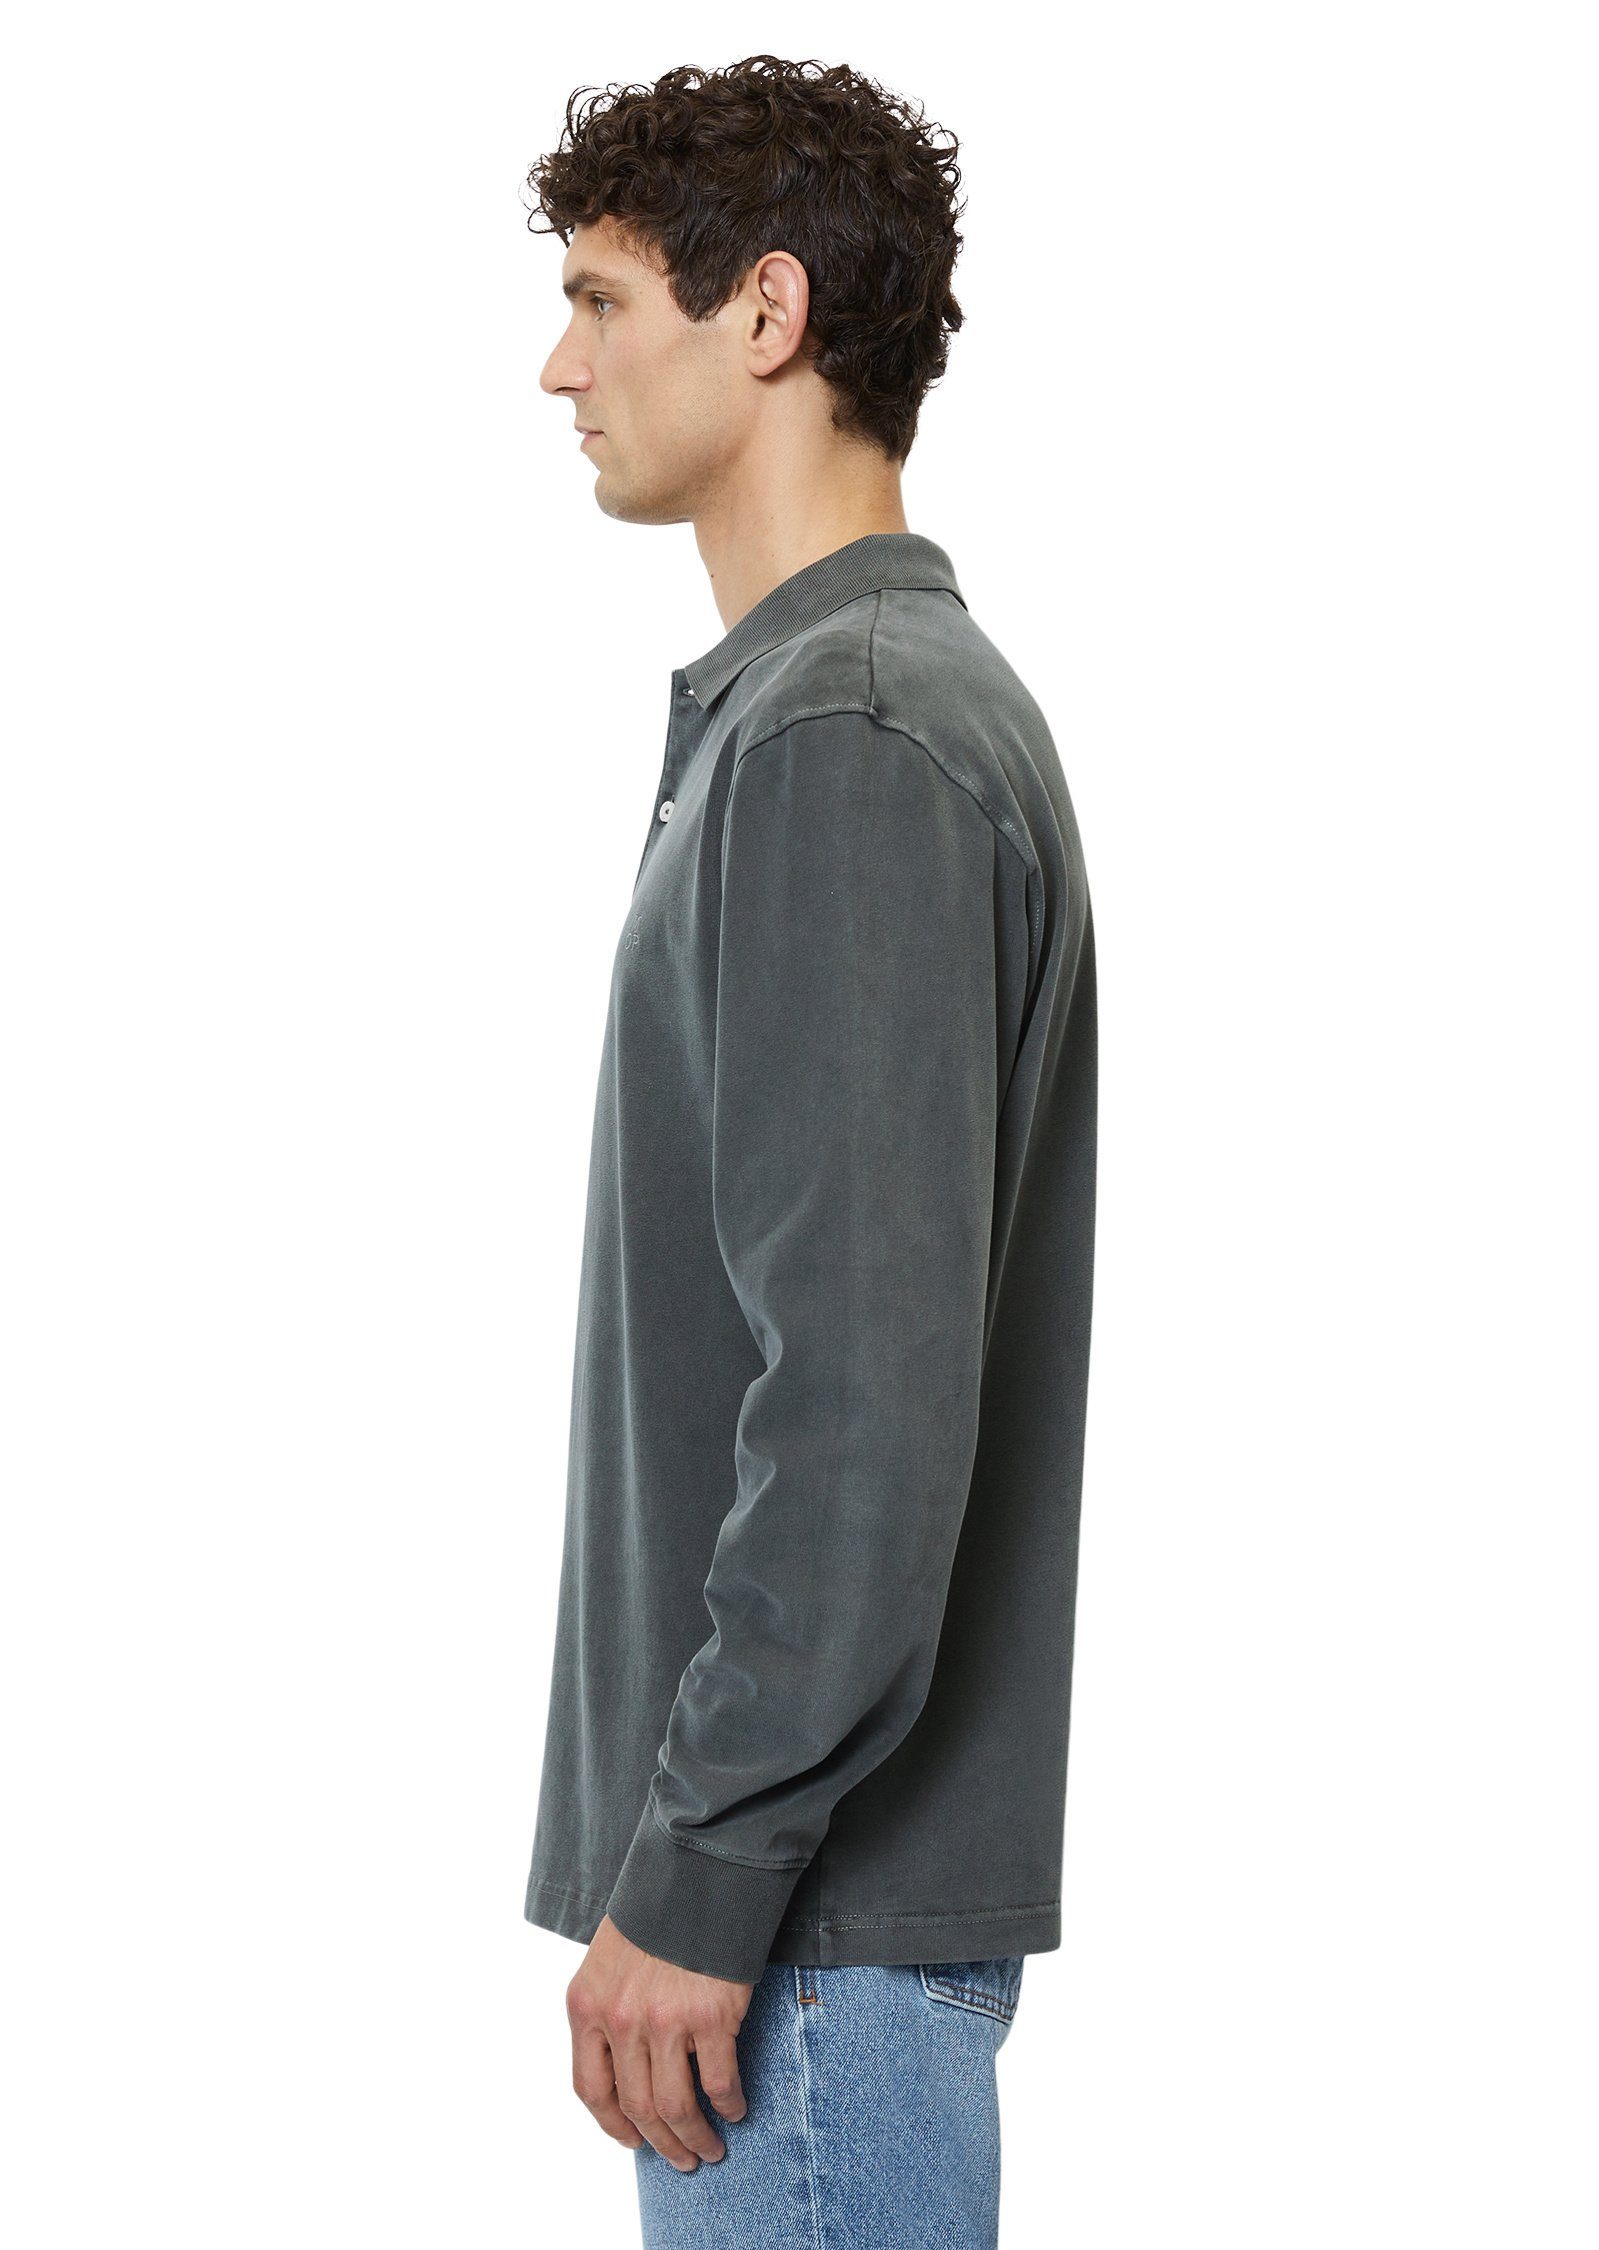 schwerer Langarm-Poloshirt grau in Marc Soft-Touch-Jersey-Qualität O'Polo